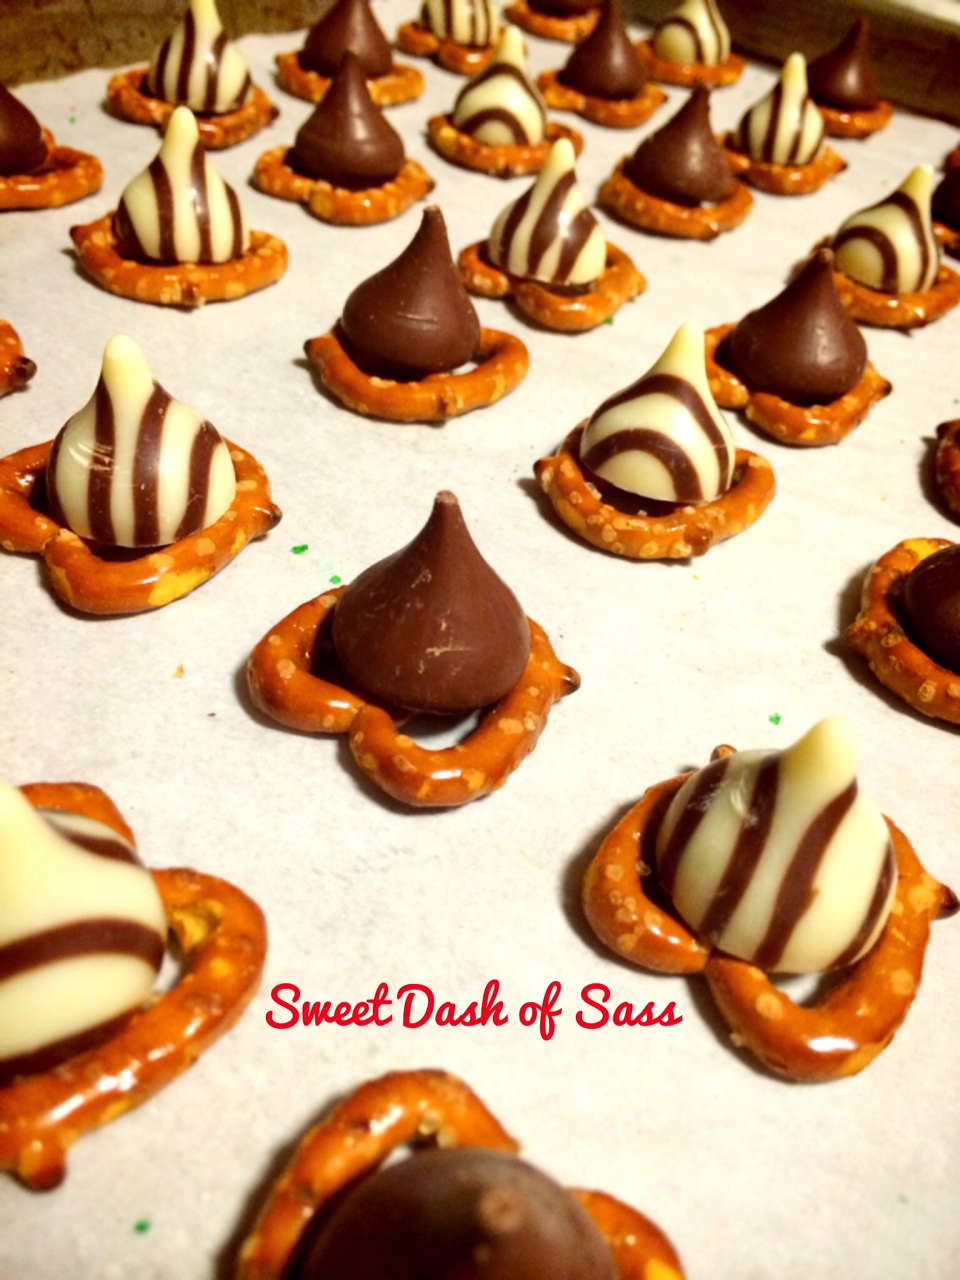 Chocolate Pretzel Bites - www.SweetDashofSass.com - 25 Days of Christmas - Cookie Style